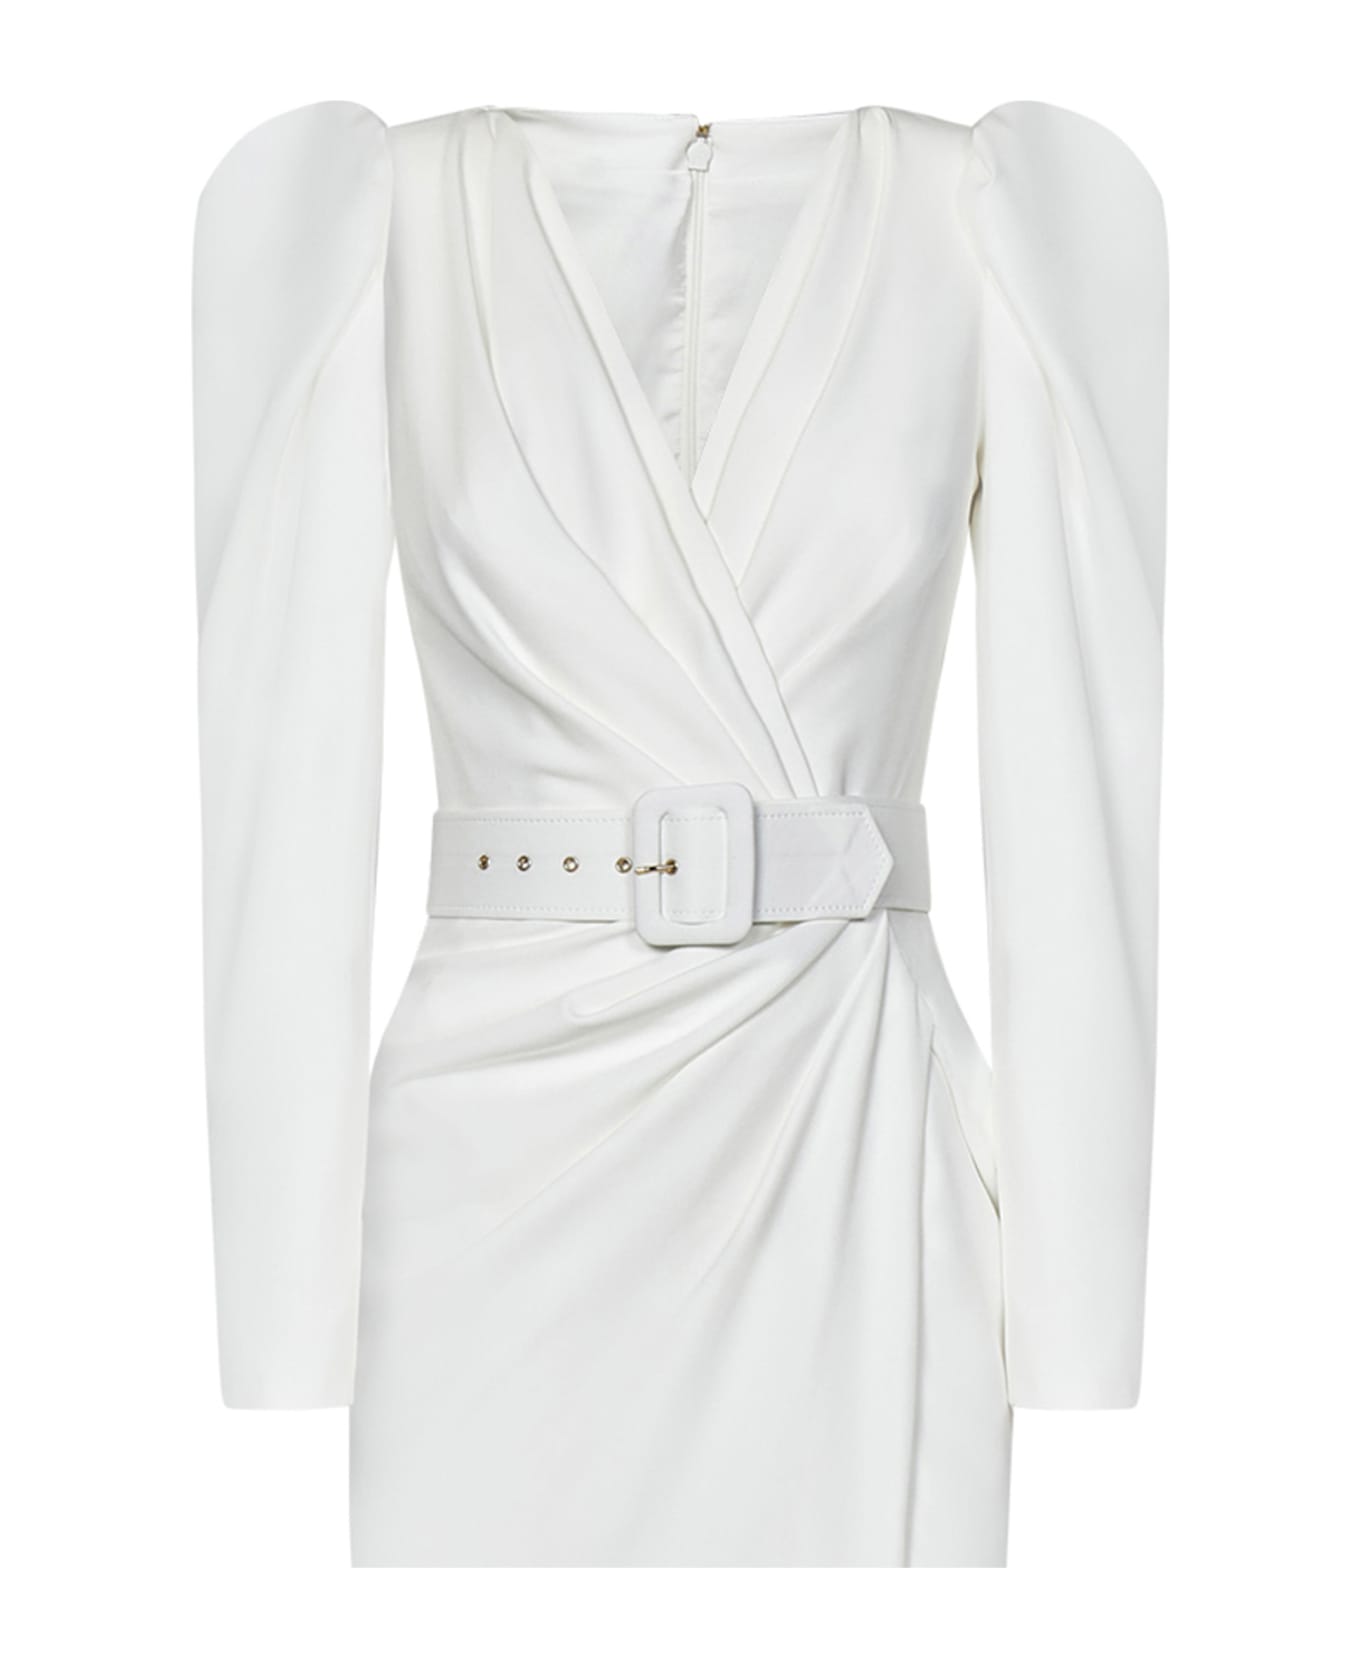 Rhea Costa Chloe Long Dress - White